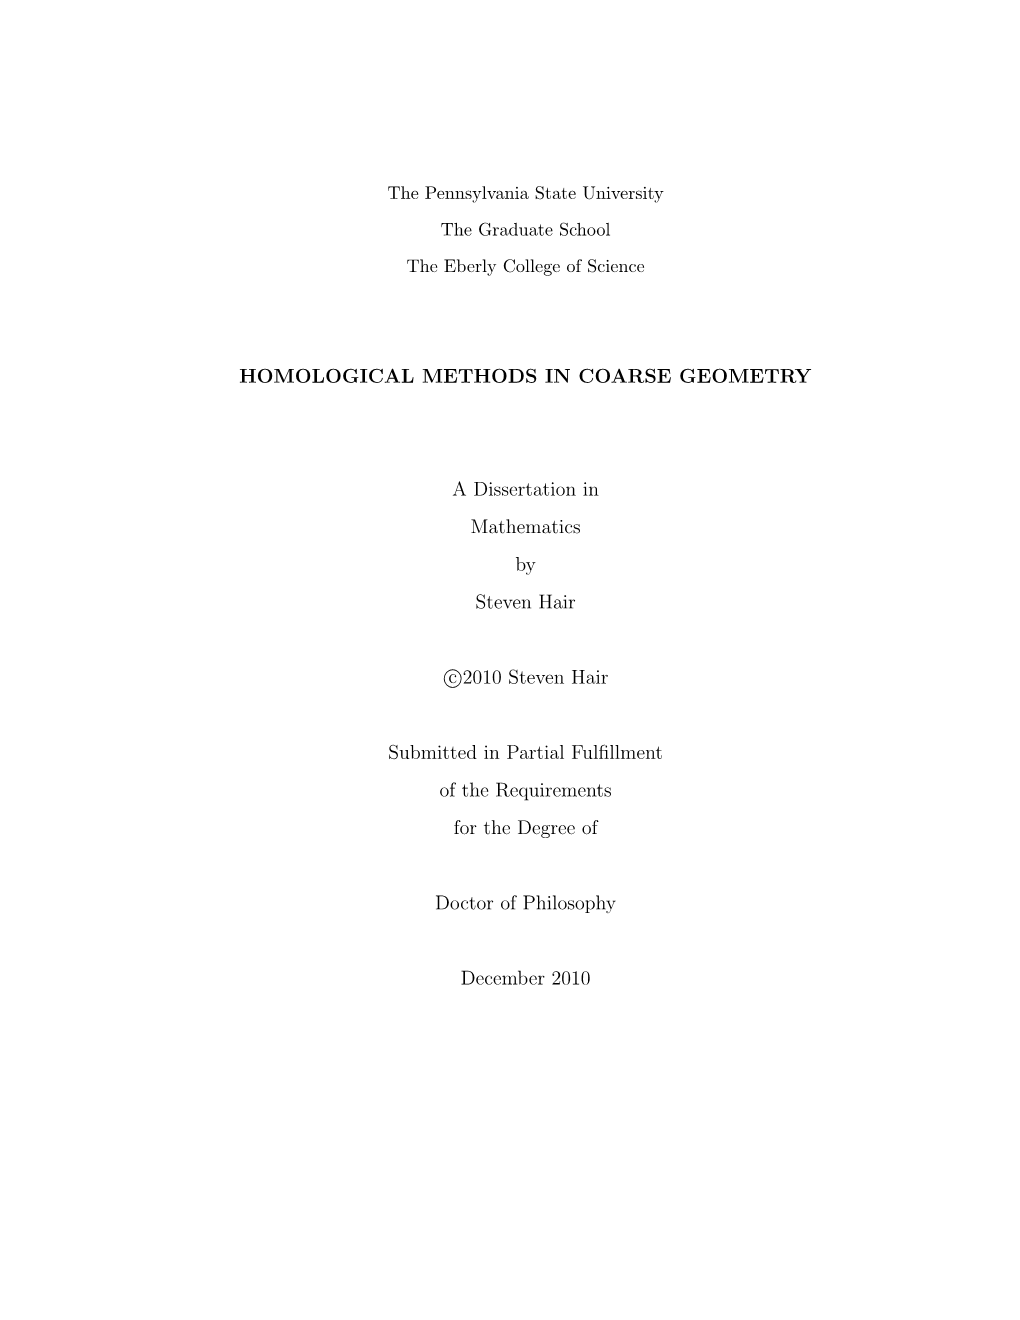 Homological Methods in Coarse Geometry A